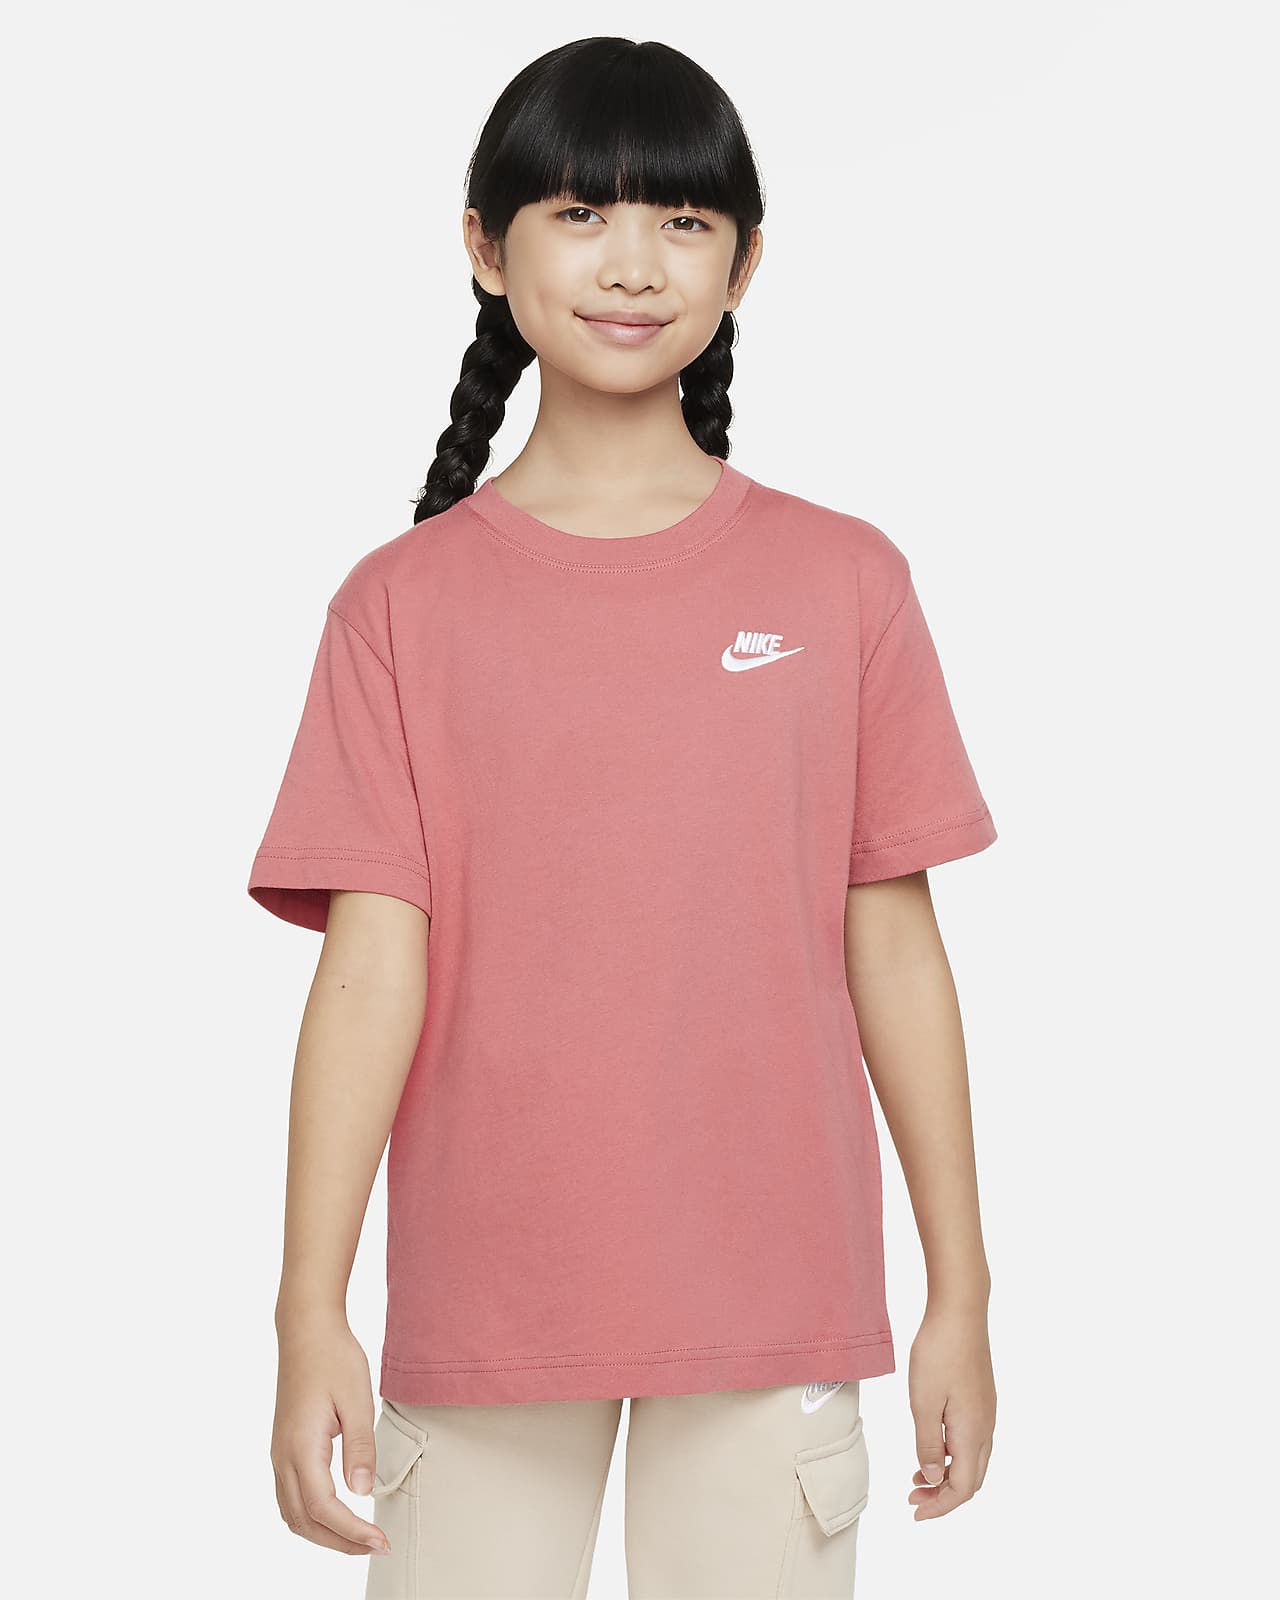 Women's Pink Tops & T-Shirts. Nike ZA